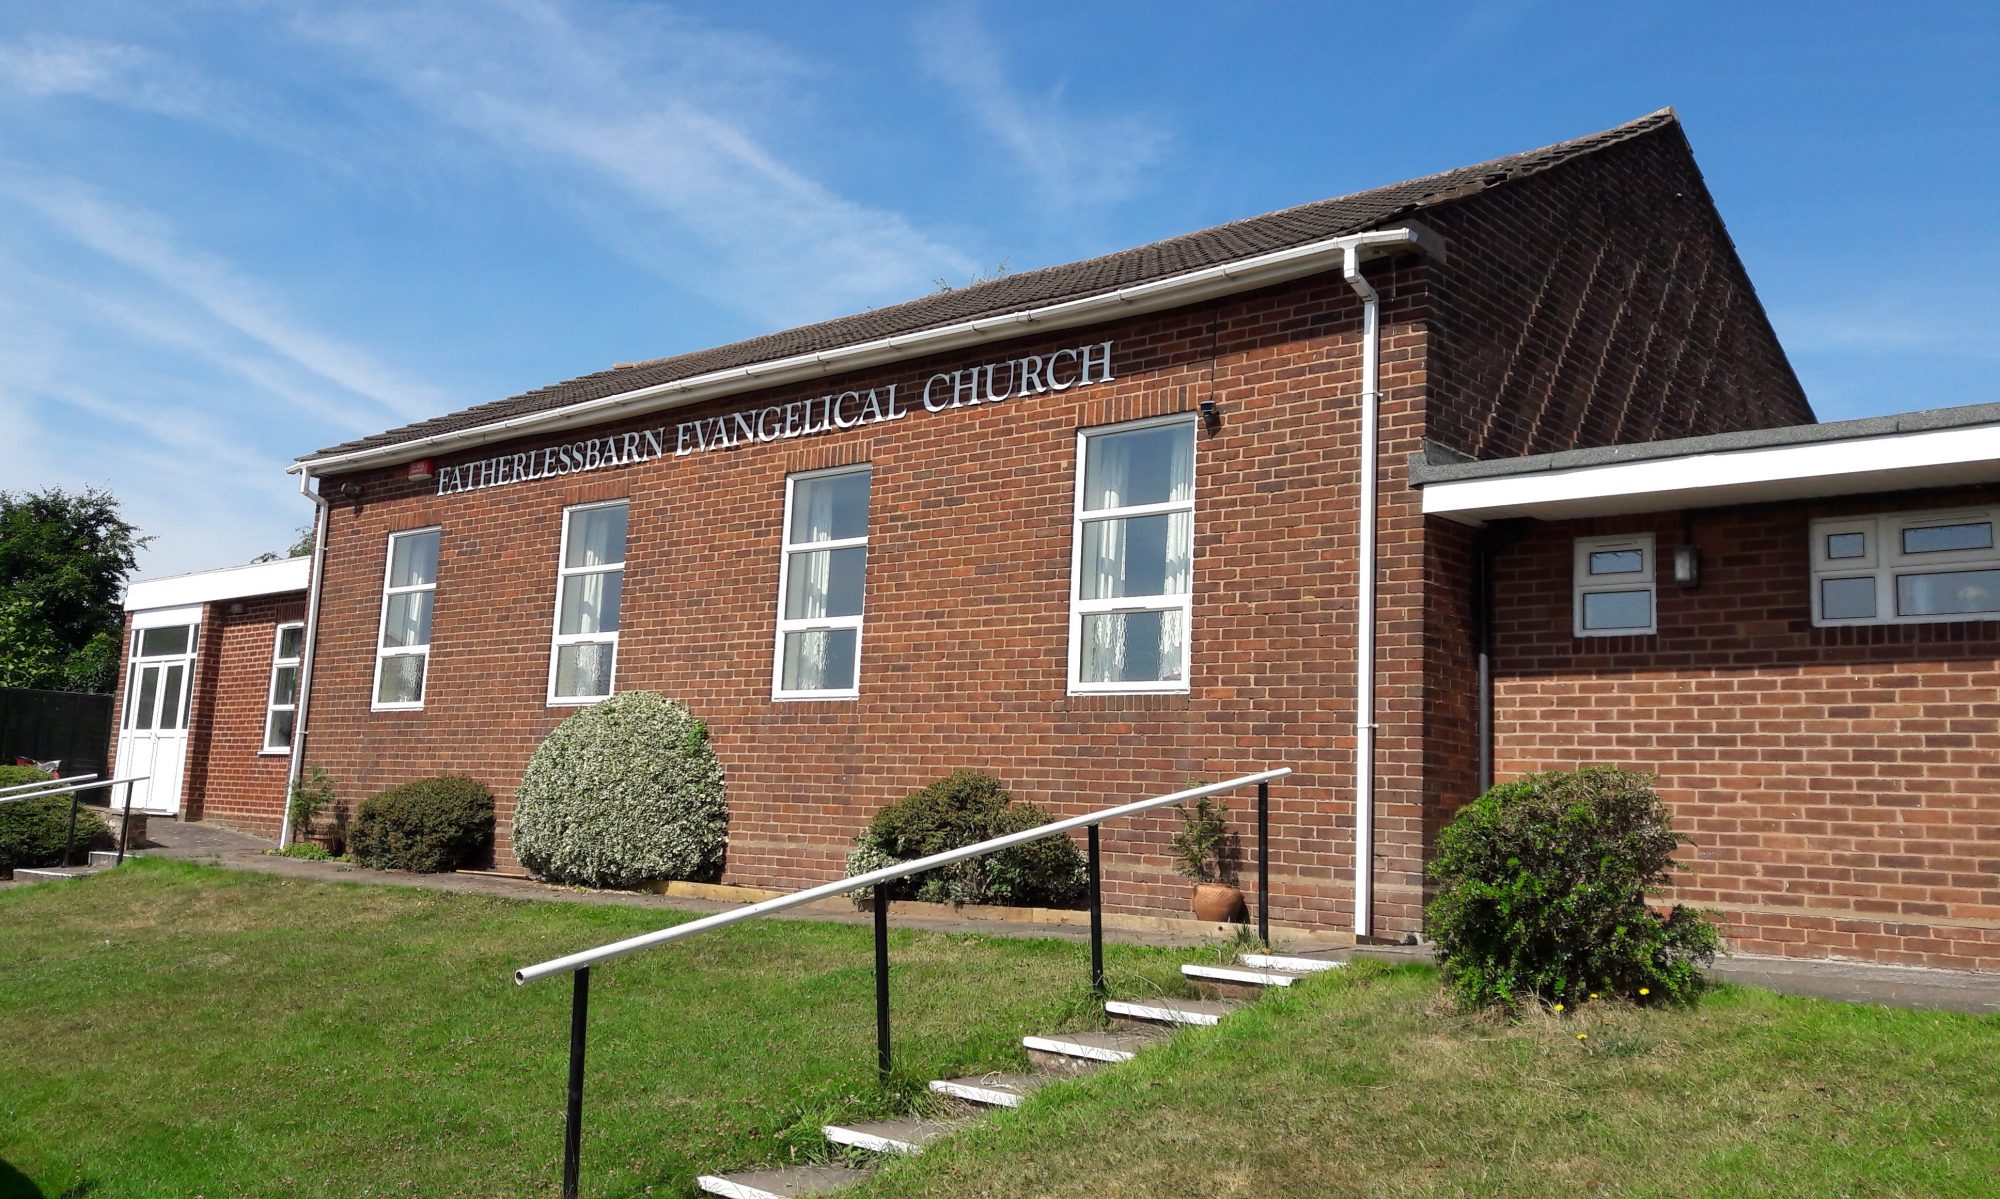 Fatherless Barn Evangelical Church